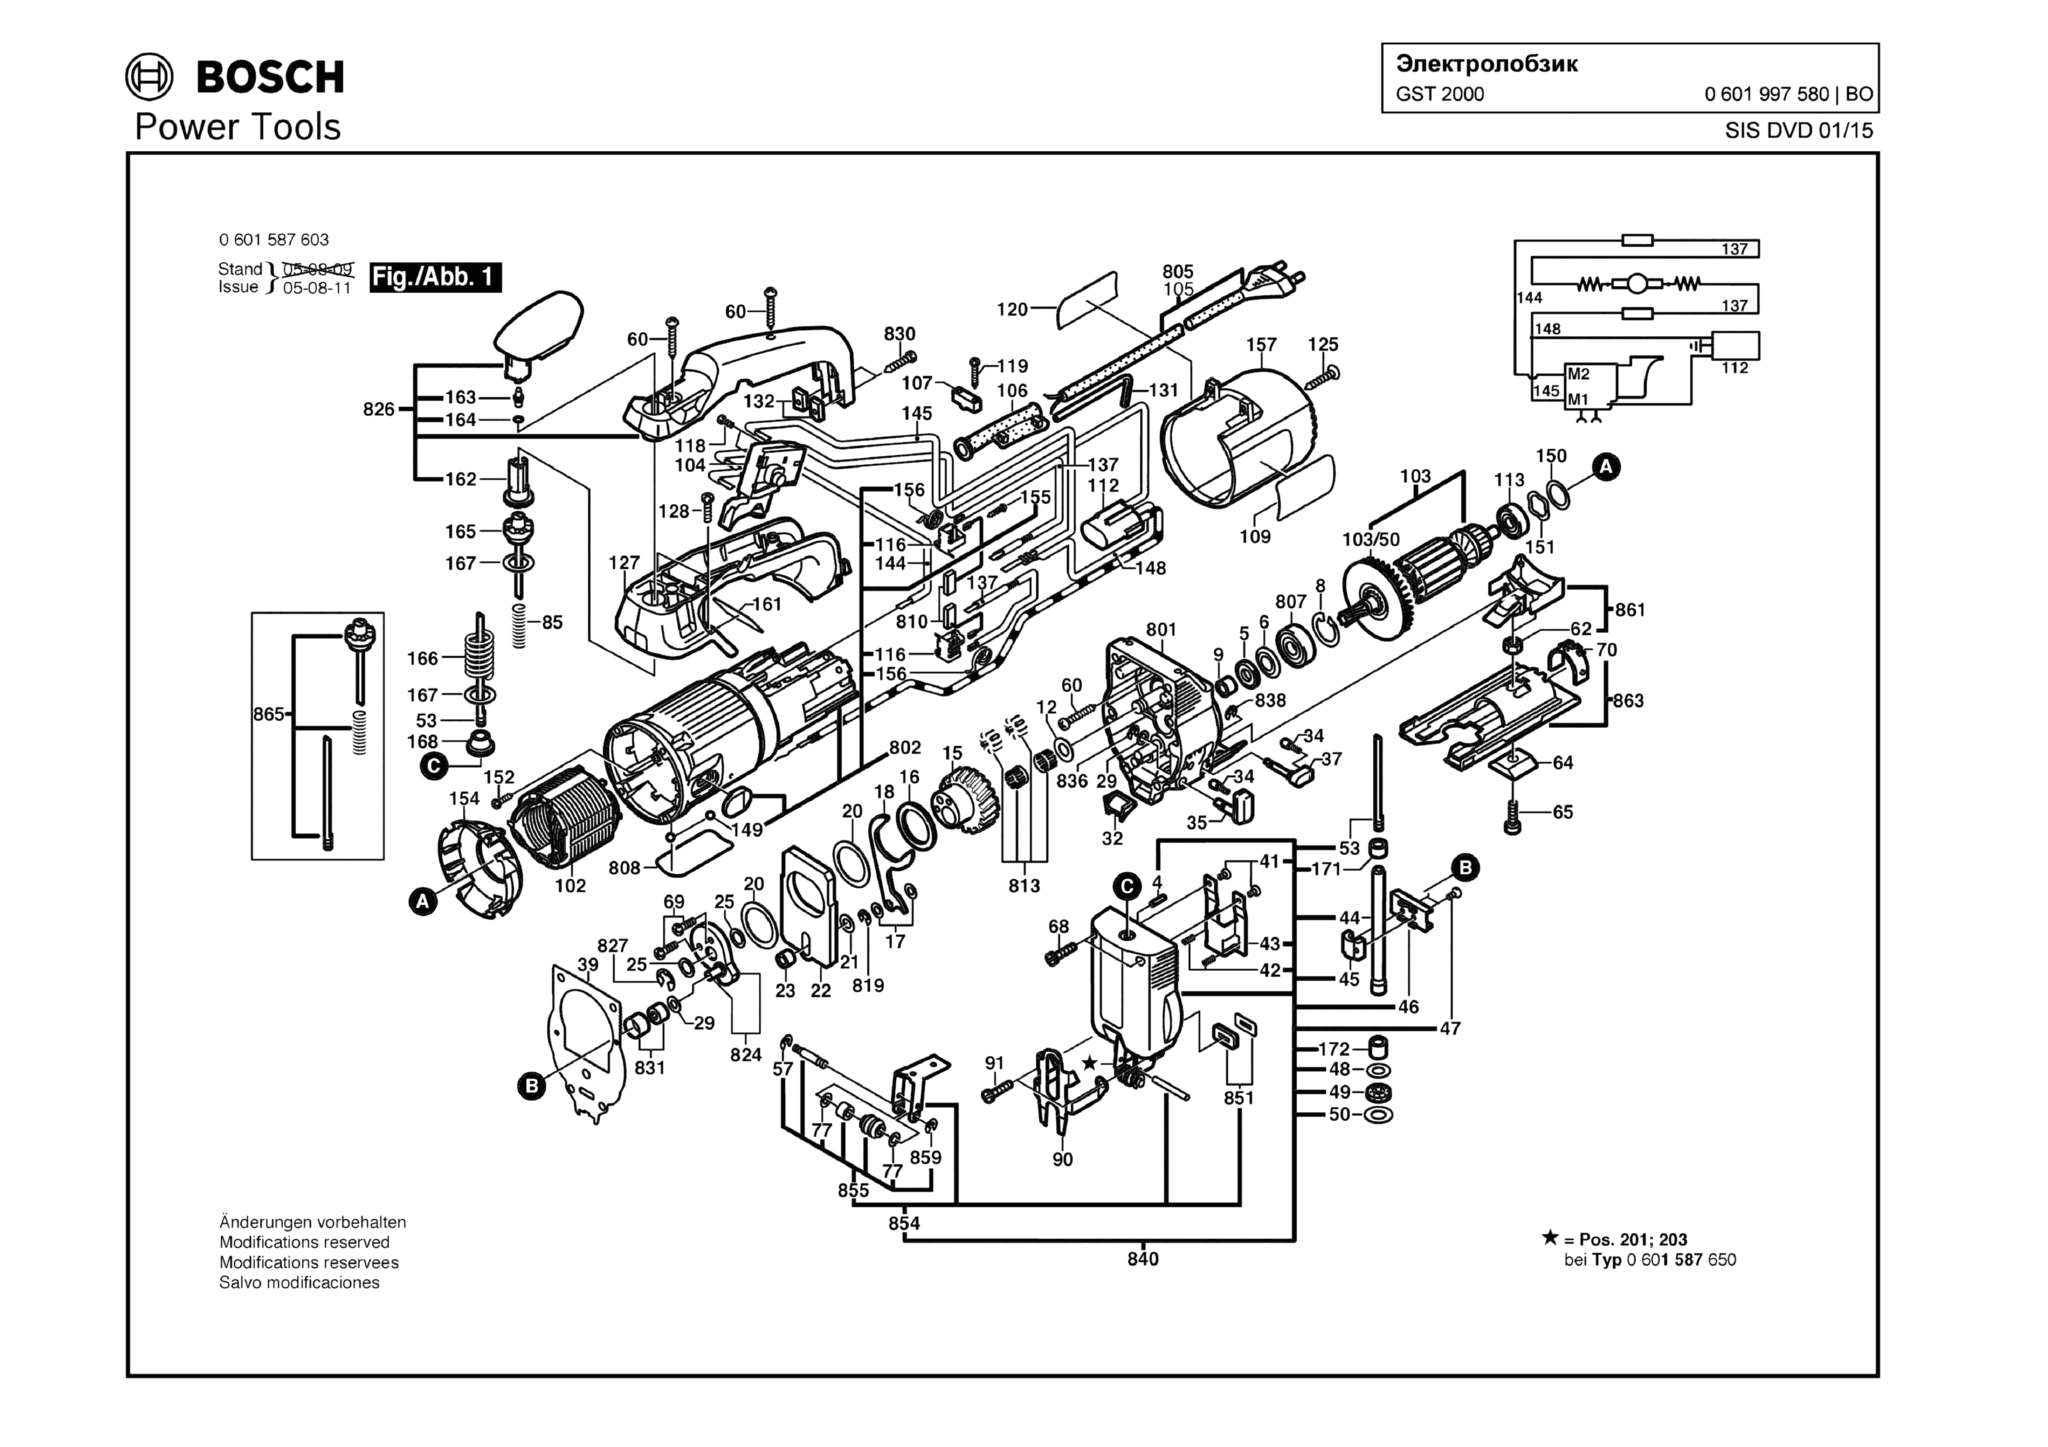 Запчасти, схема и деталировка Bosch GST 2000 (ТИП 0601997580)